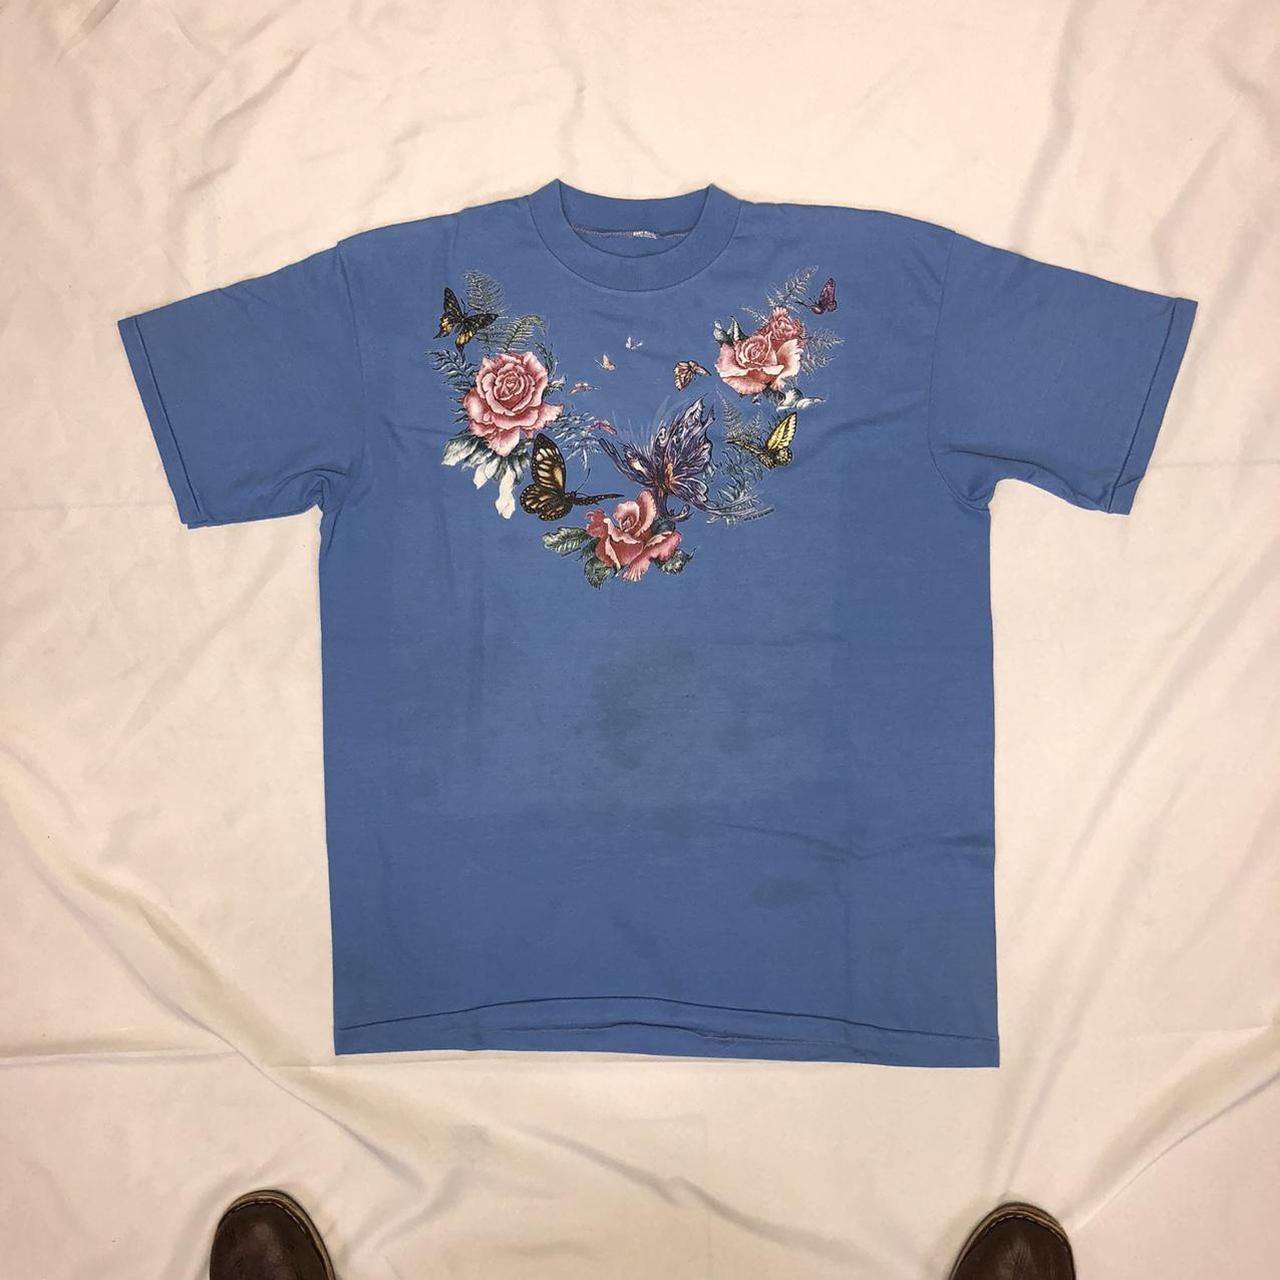 Product Image 2 - Vintage single stitch t-shirt

Fits a